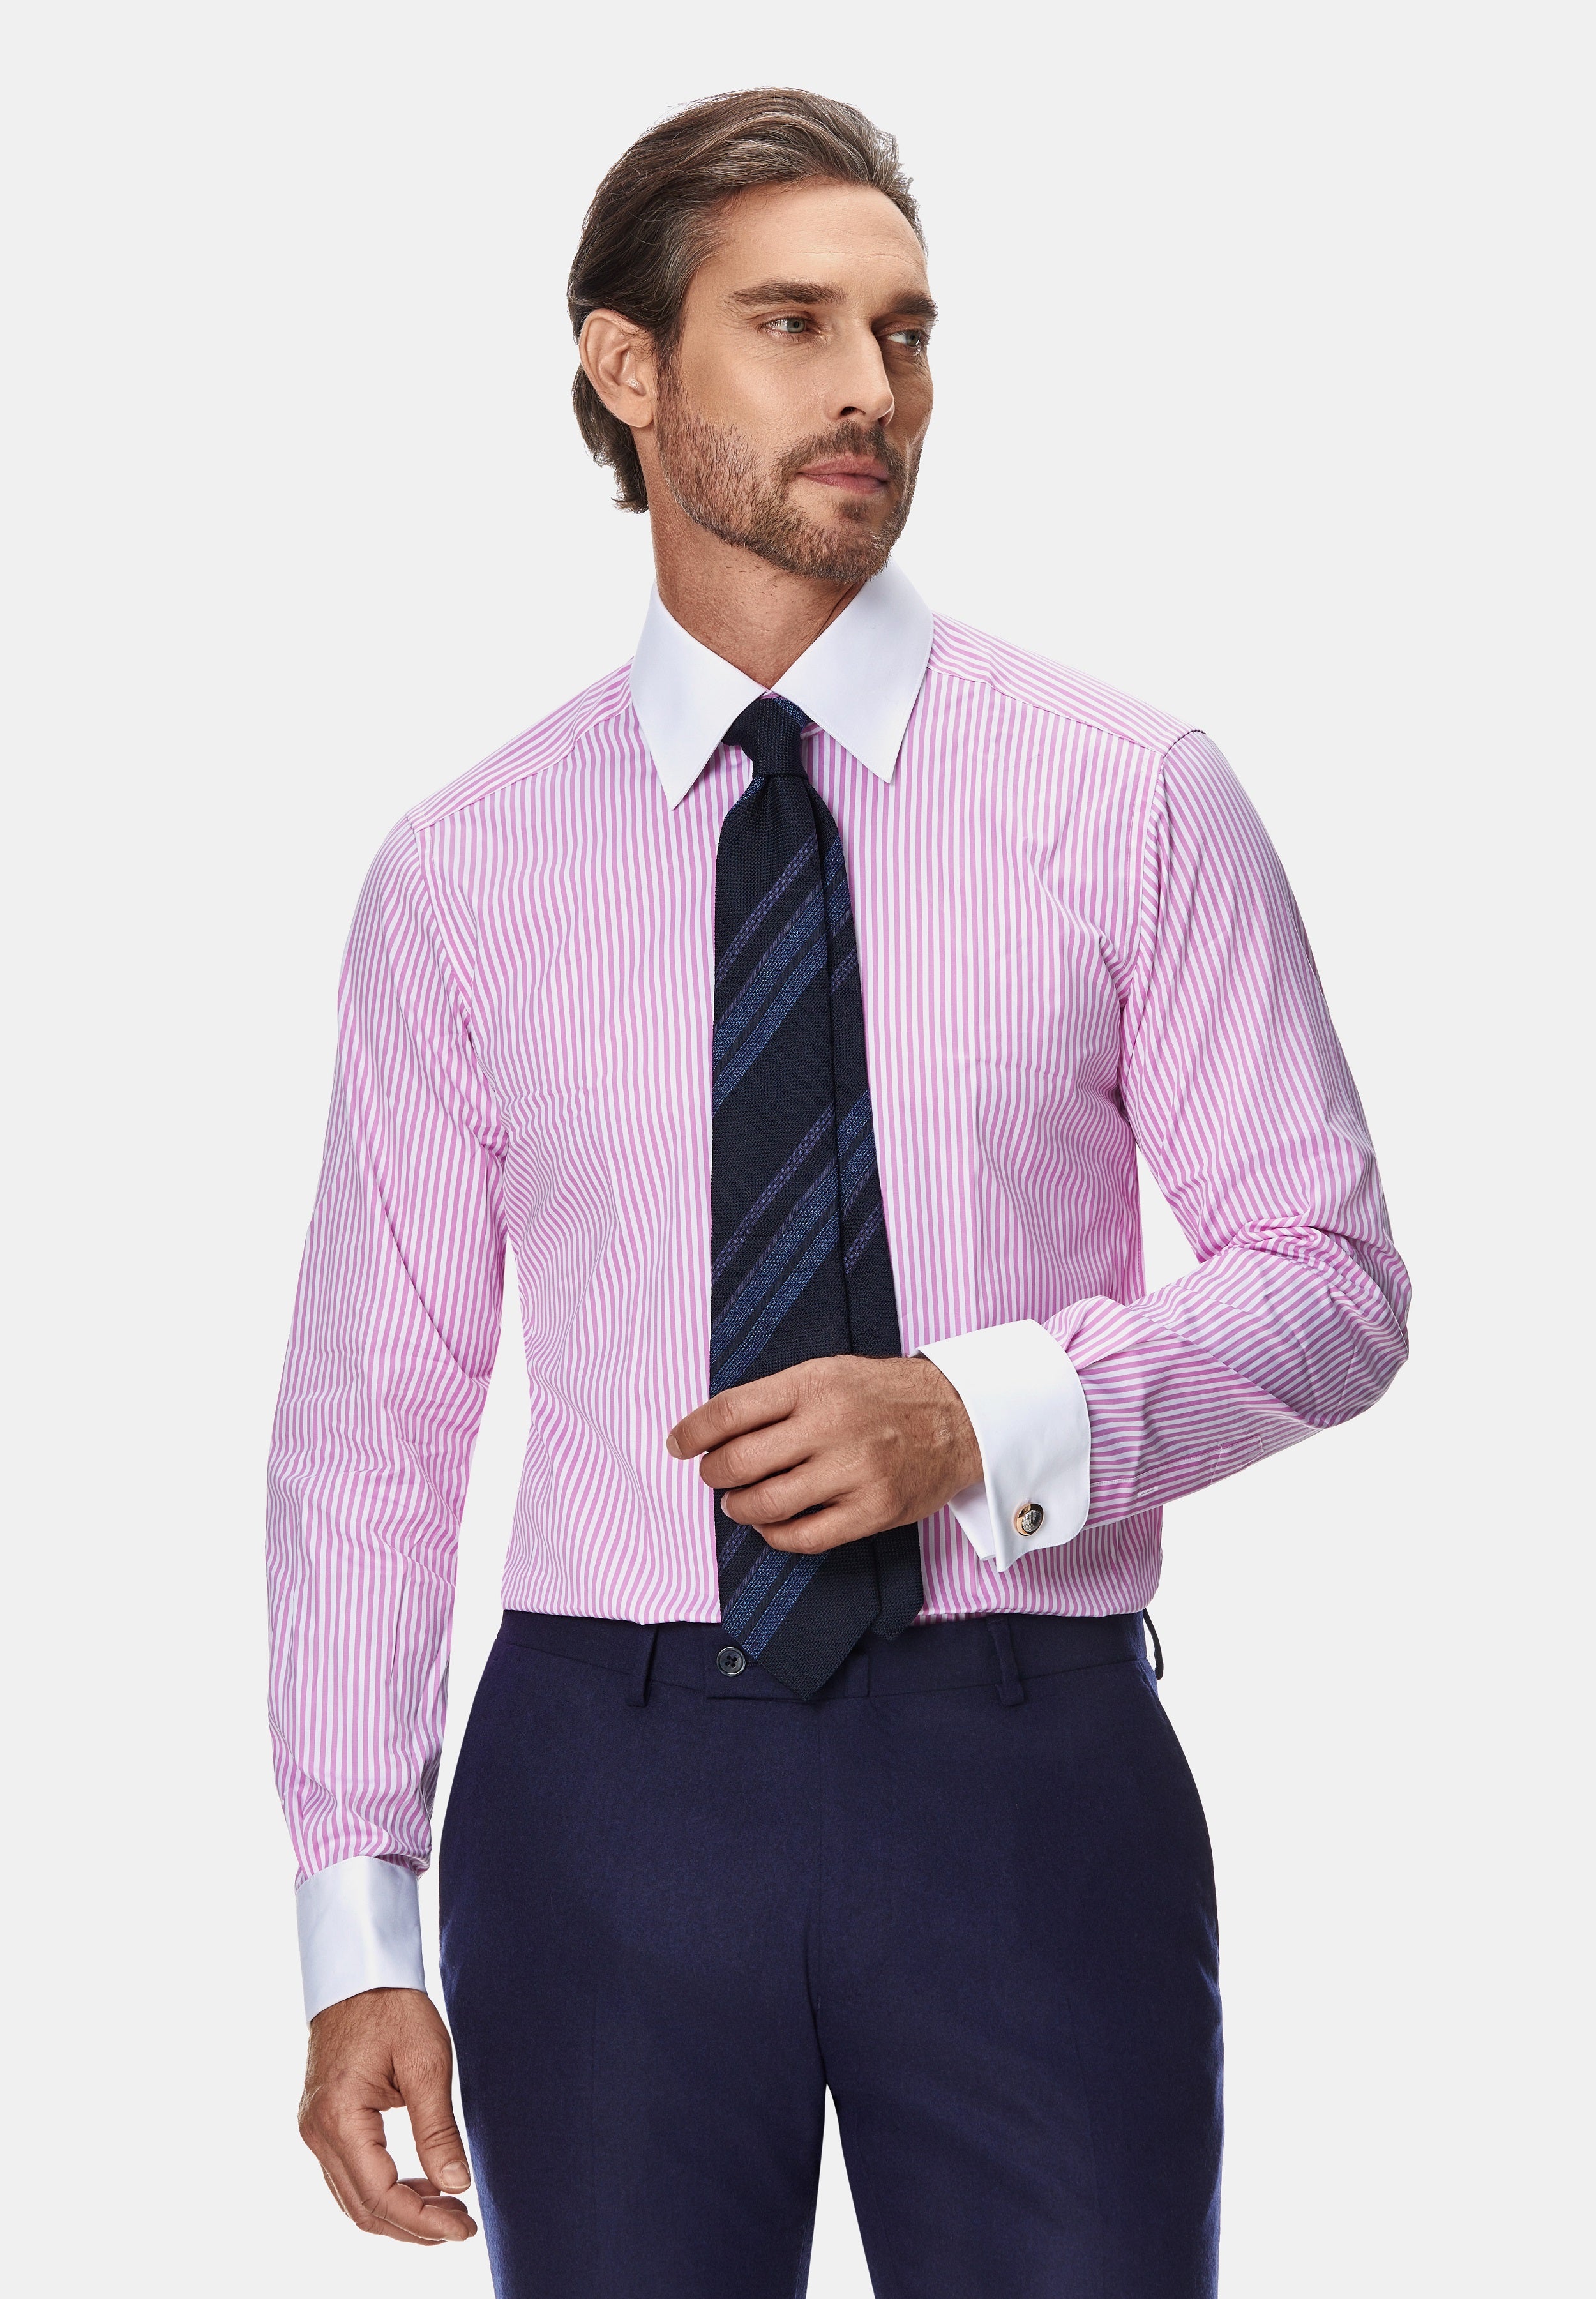 White shirt with pink stripes, button cuffs